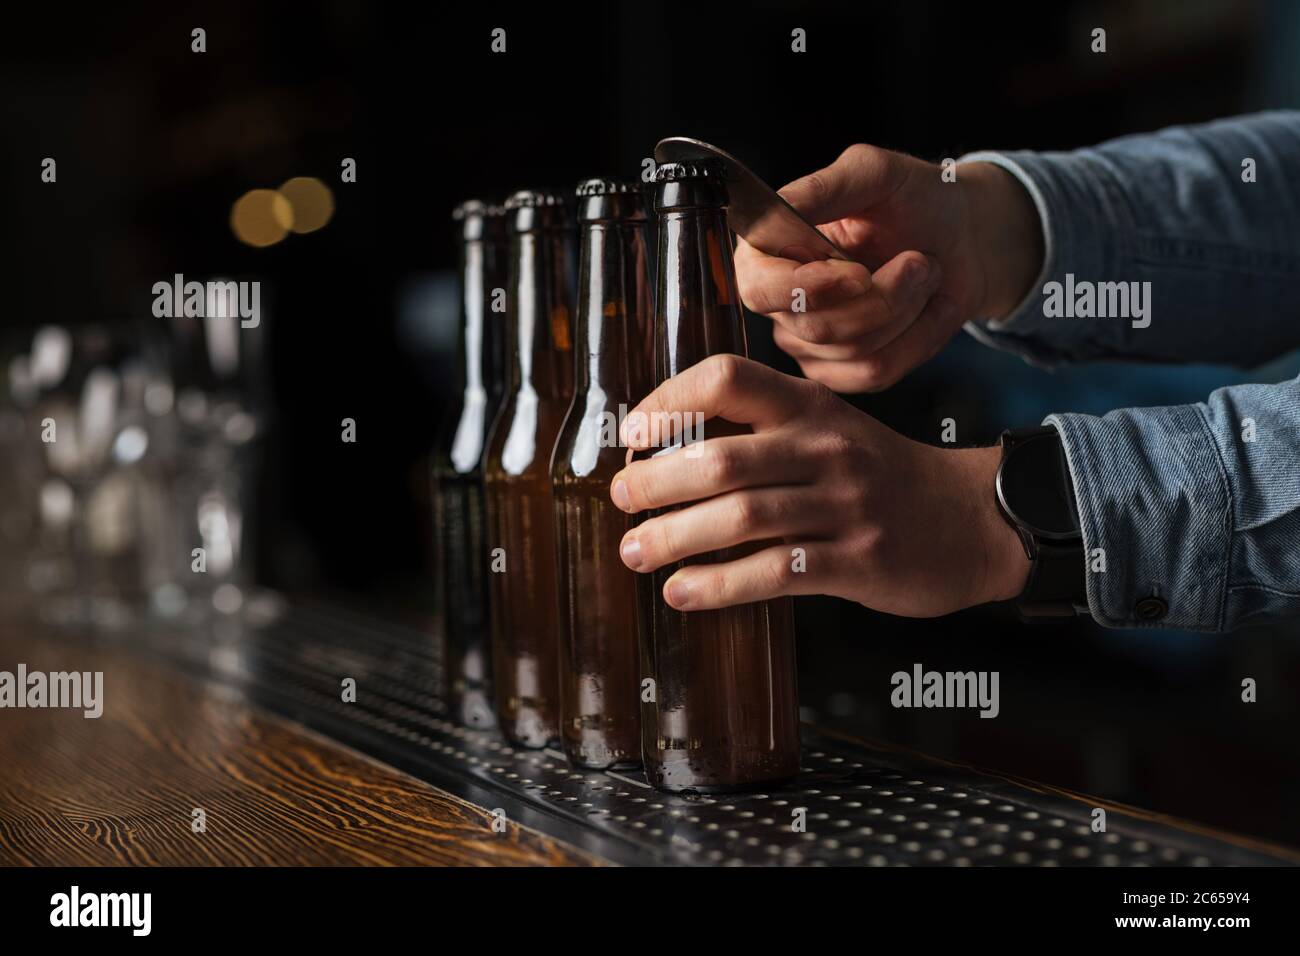 Beer festival. Bartender shirt opens bottles of beer on bar counter on blurred background Stock Photo